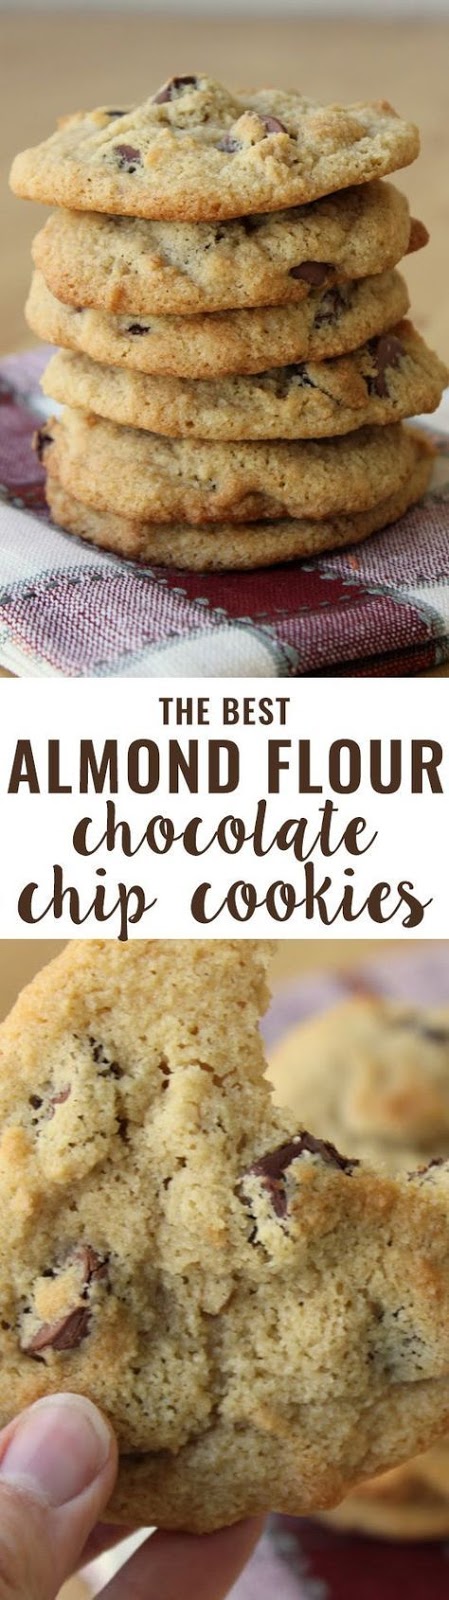 almond flour chocolate chip cookies {grain-free}